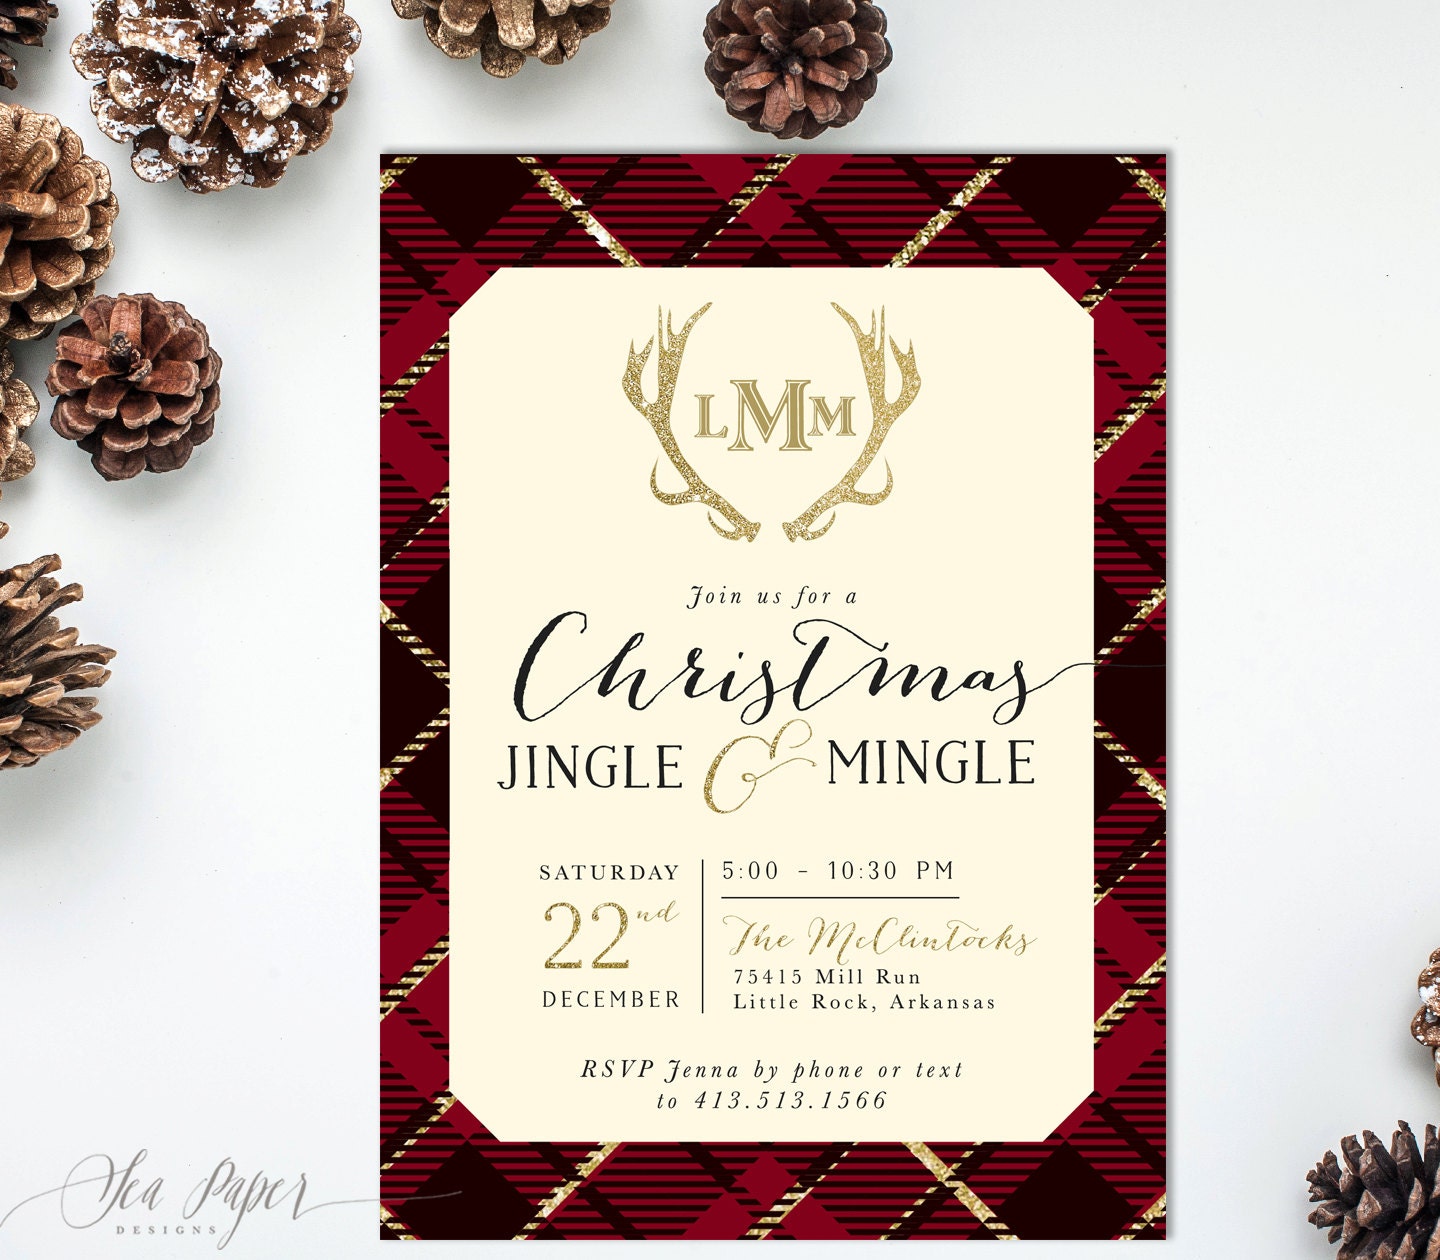 Holiday Party Invitation, Christmas Jingle & Mingle Plaid & Gold Cocktail Invitation - 13 Red"